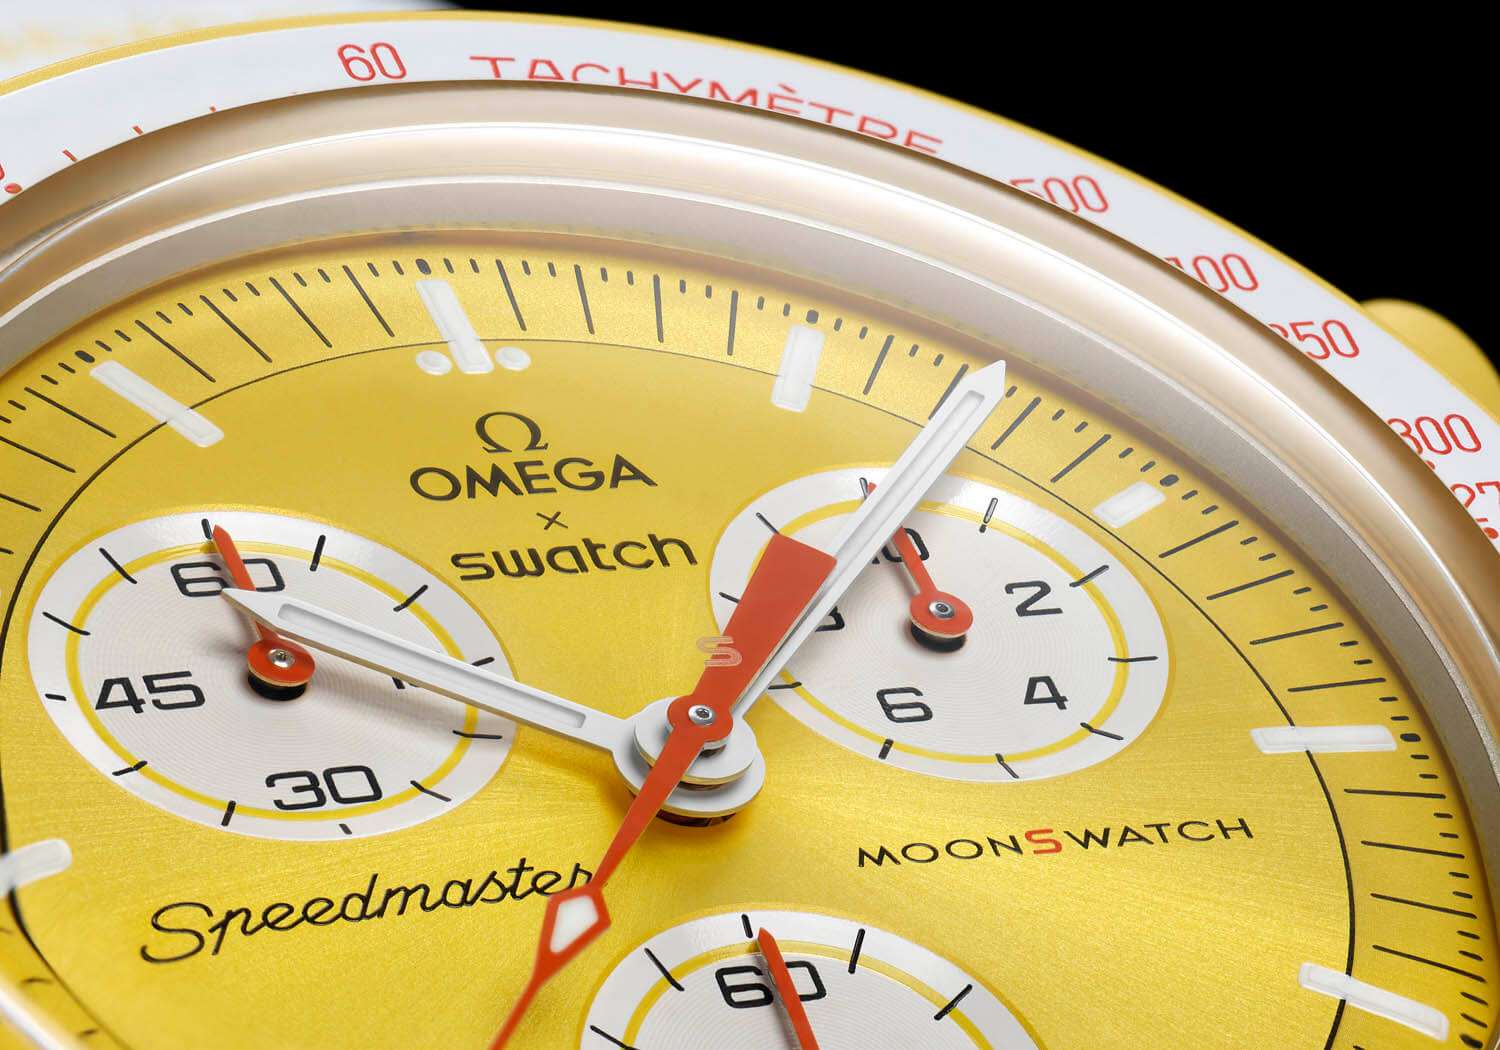 Omega Swatch Bioceramic Moonwatch - Debajo del Reloj